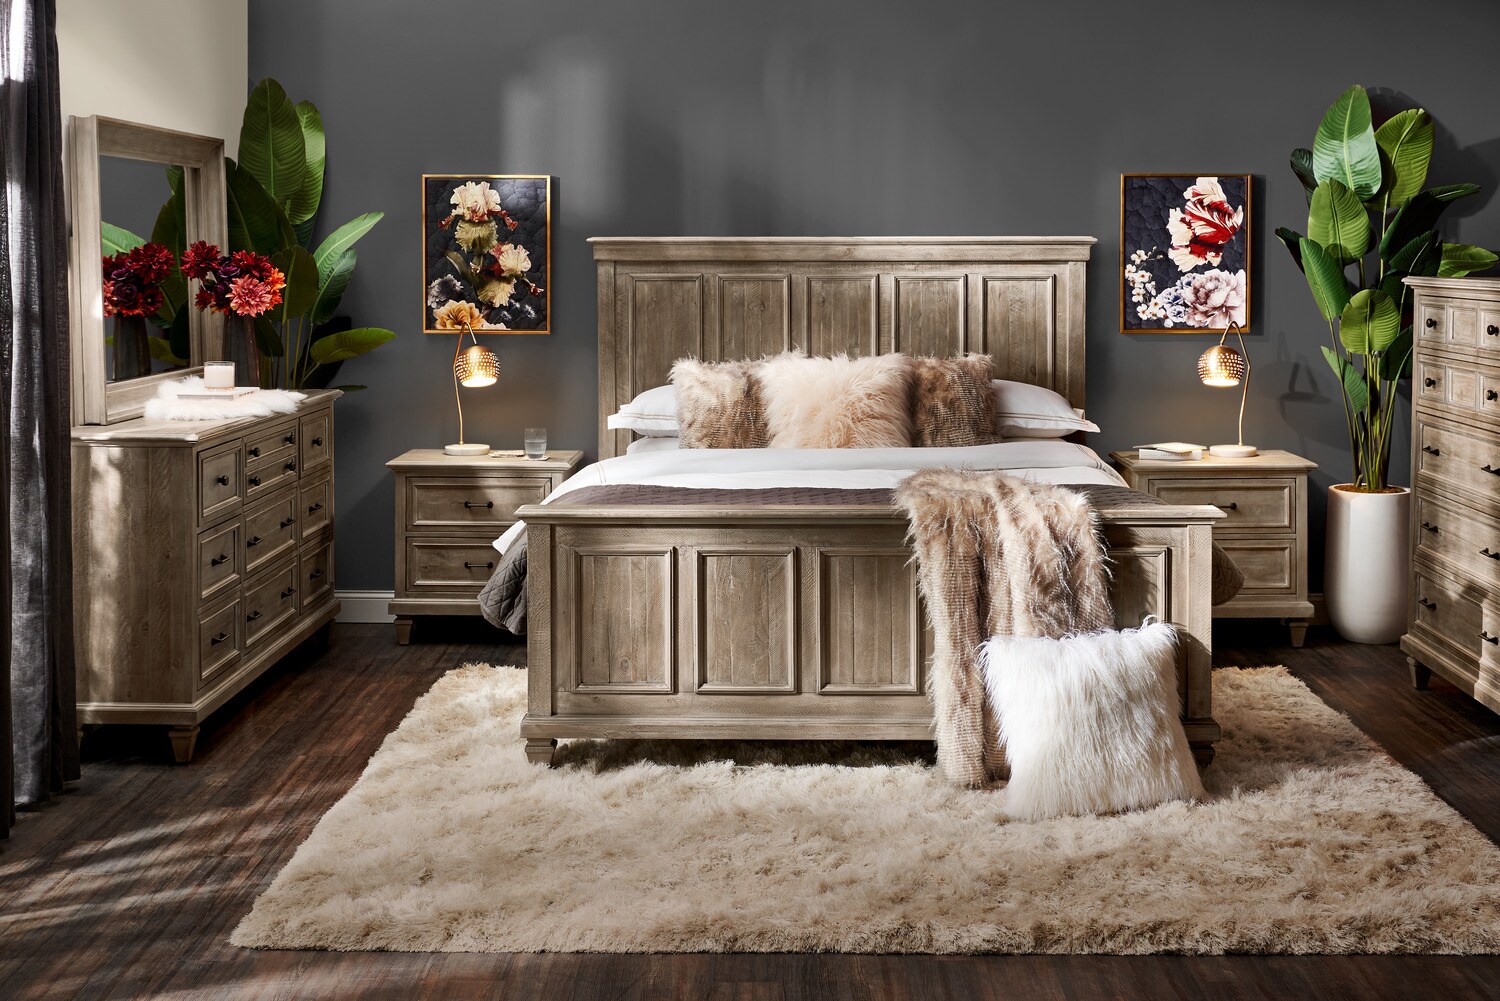 harrison solo bedroom furniture